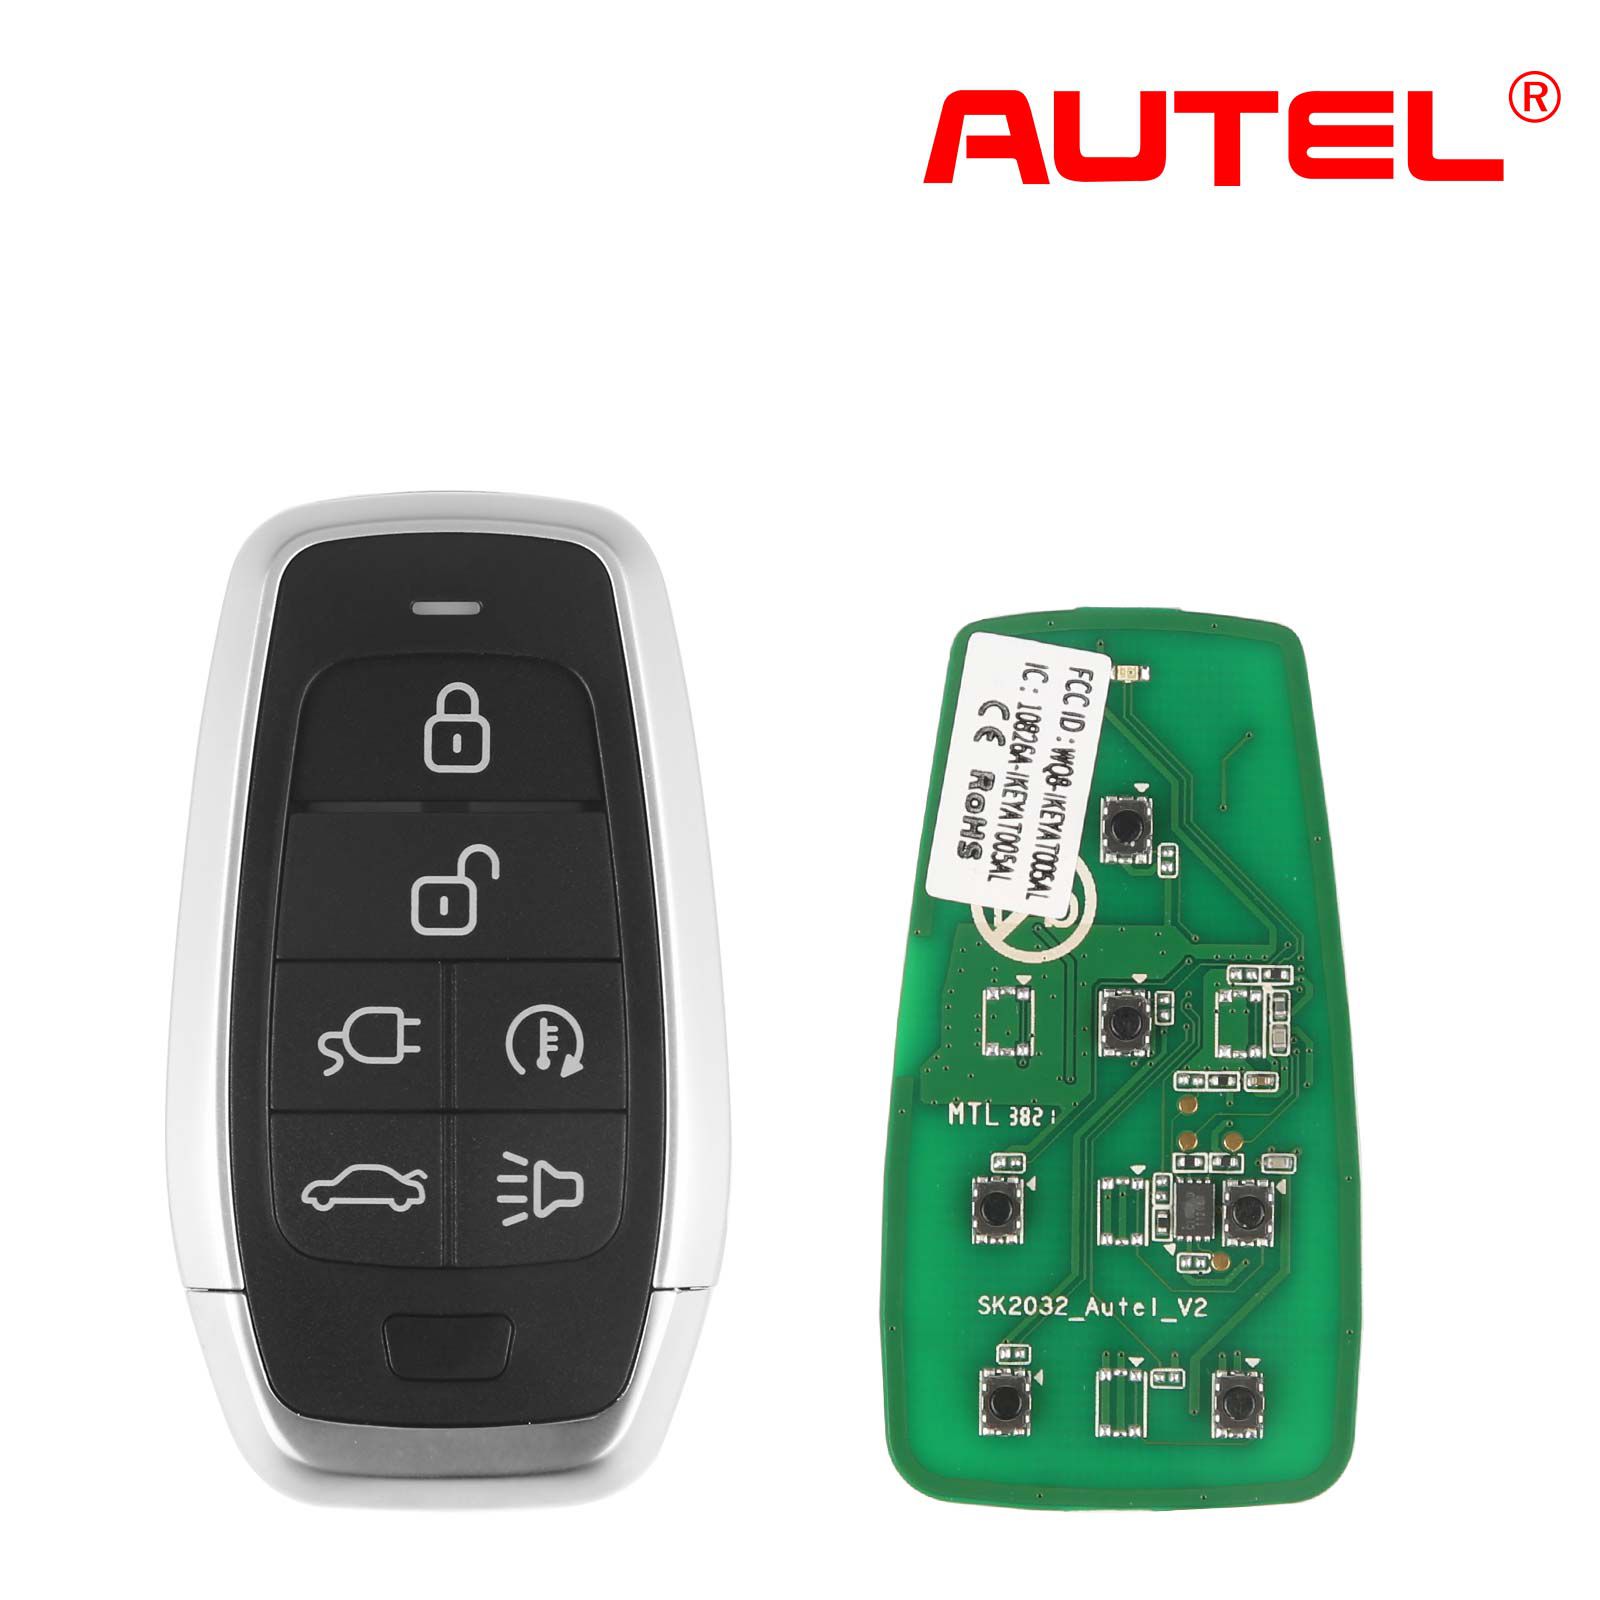 AUTEL IKEYAT006FL 6按钮独立通用智能钥匙5件/批